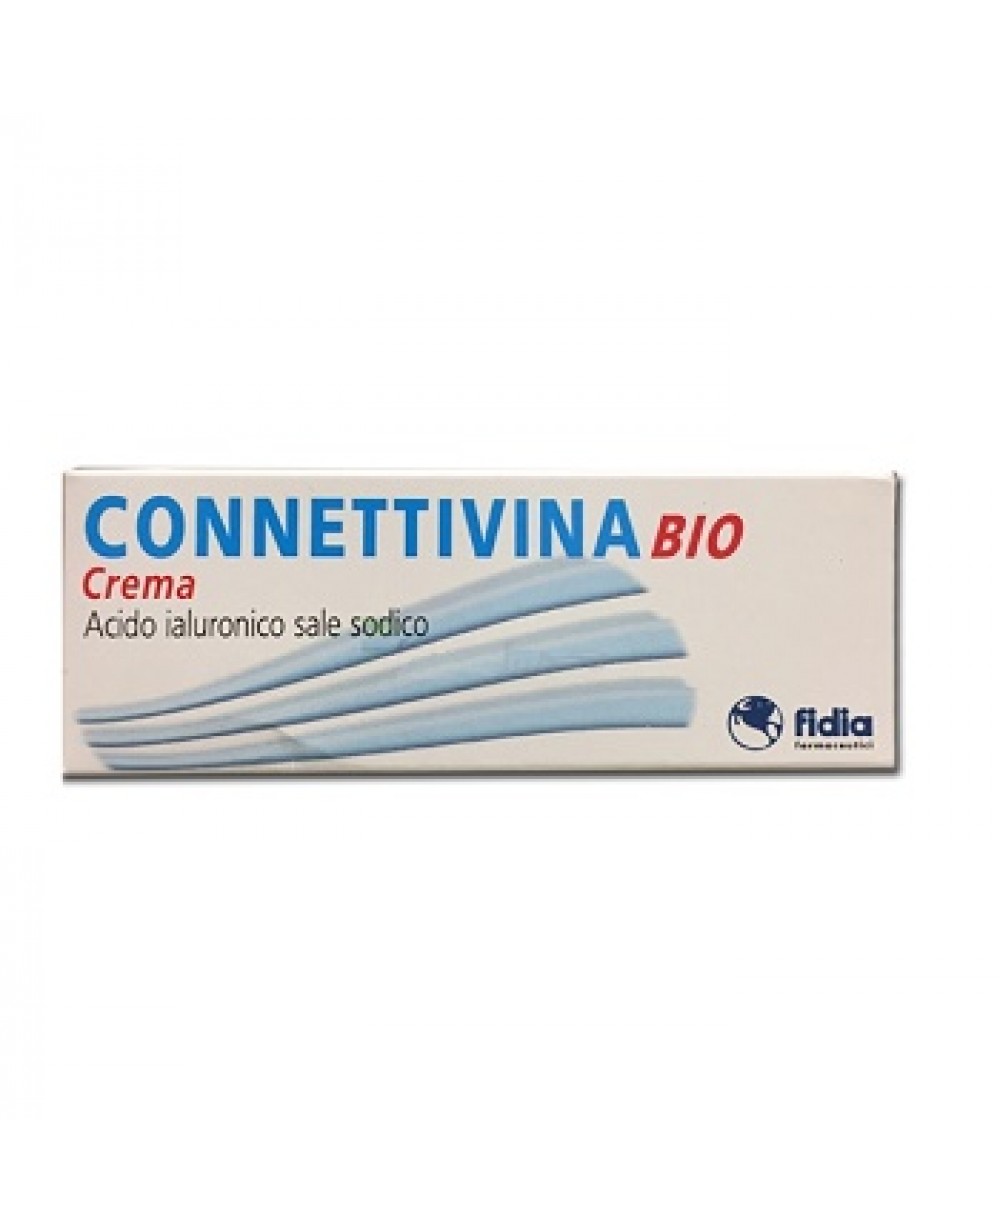 Connettivina - image 0